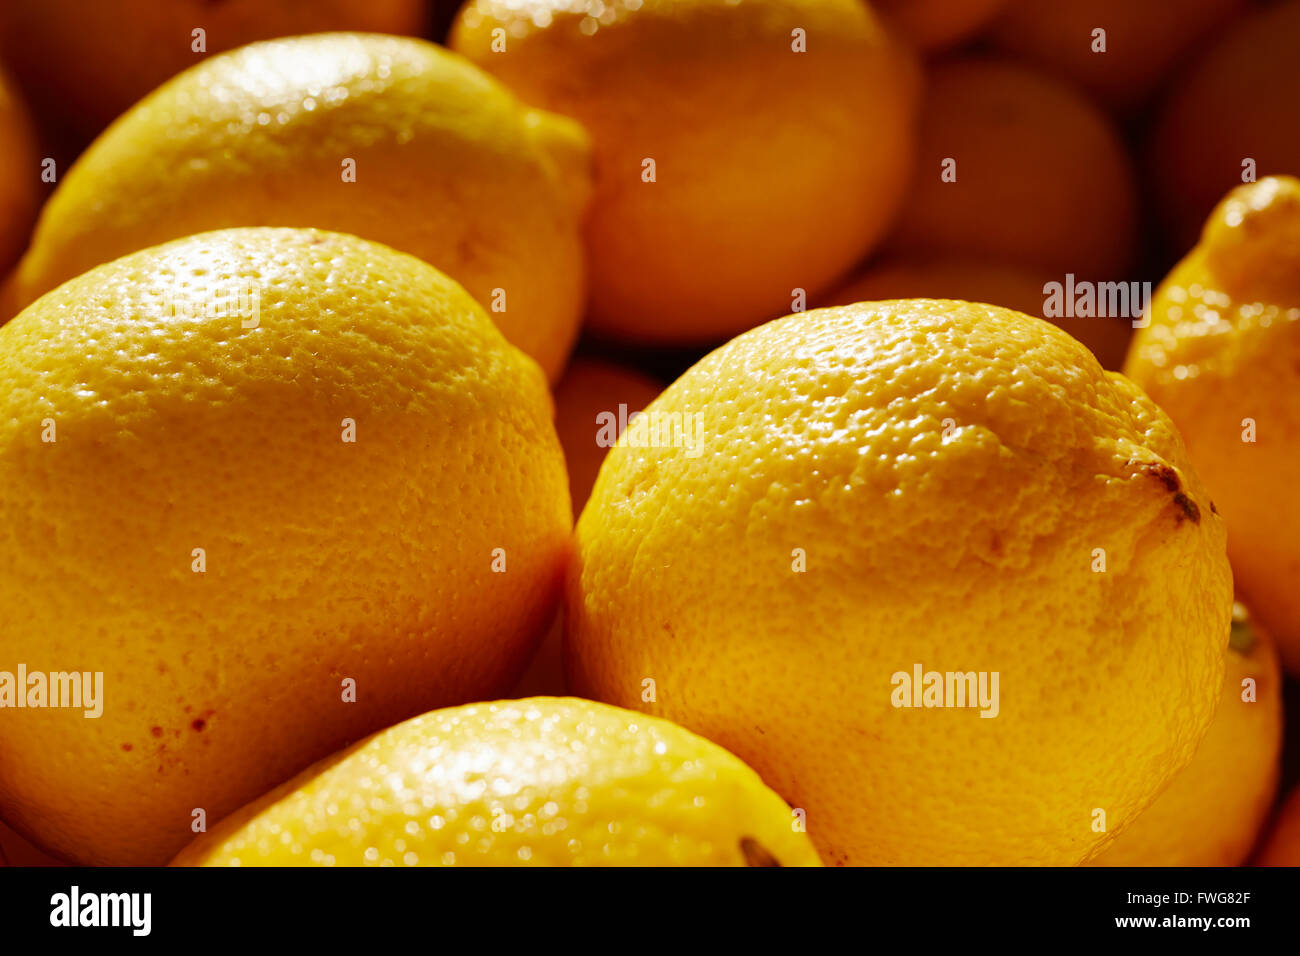 fresh, local lemons on sale at the Phoenix, Arizona farmer's market Stock Photo